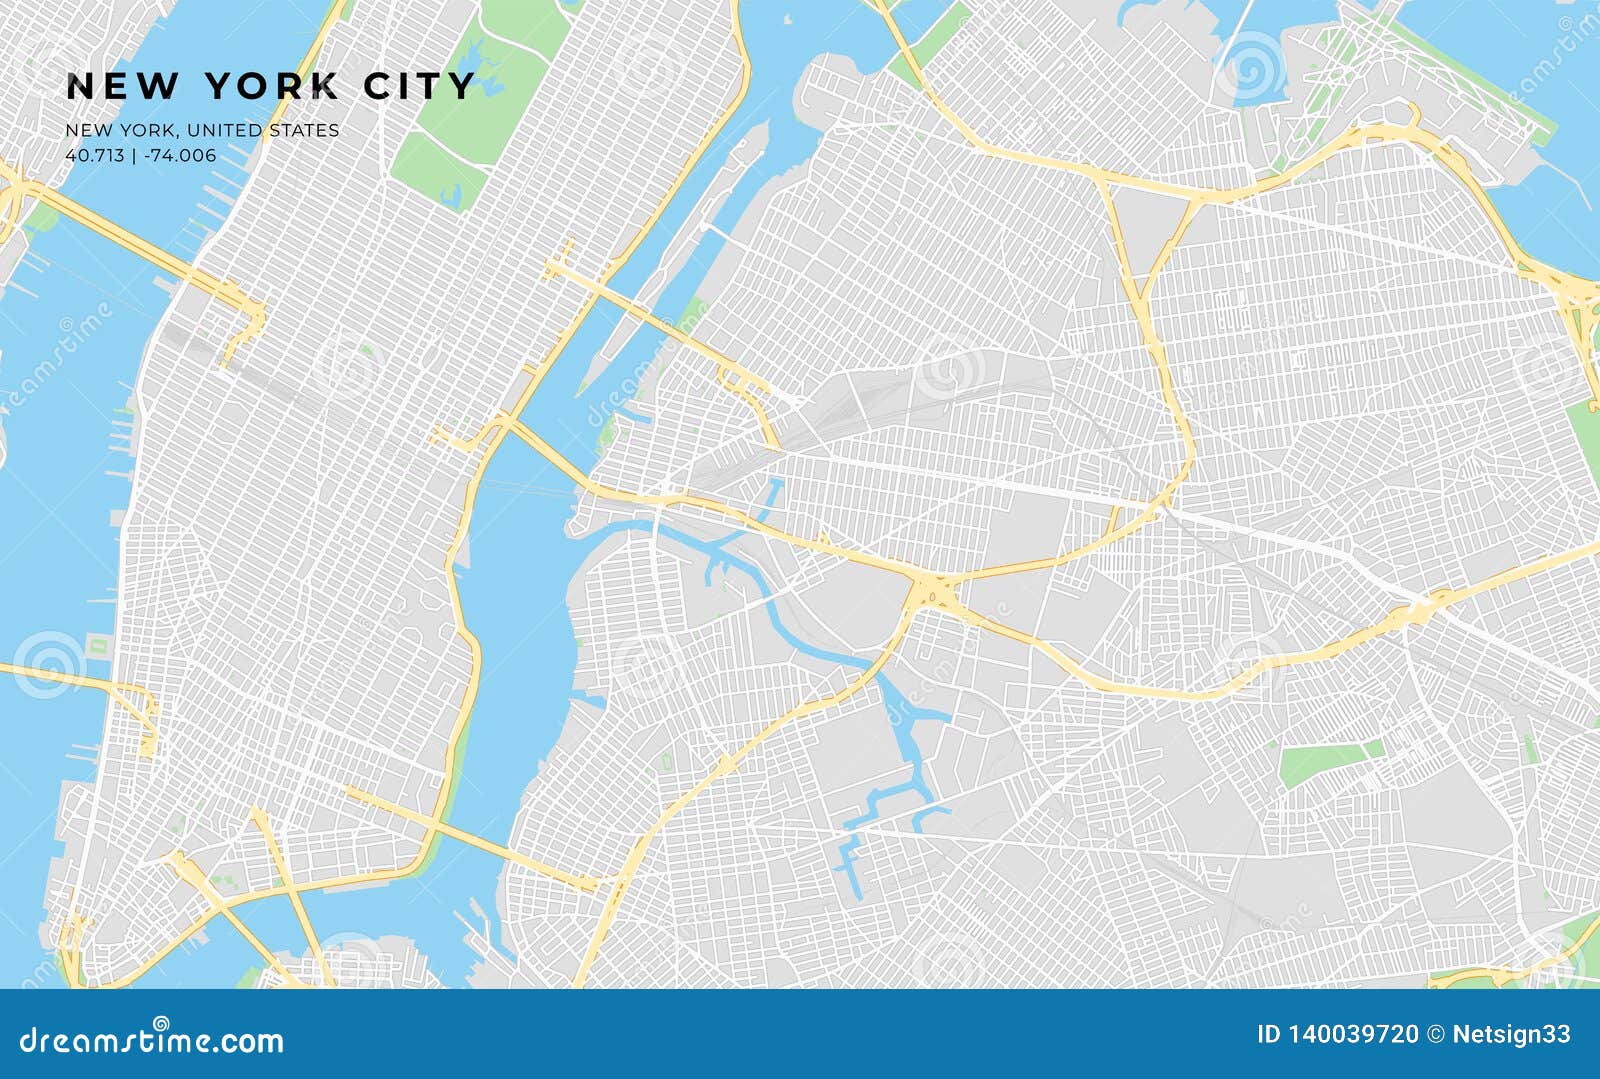 Printable Street Map Of New York City New York Stock Vector Illustration Of States Brochure 140039720